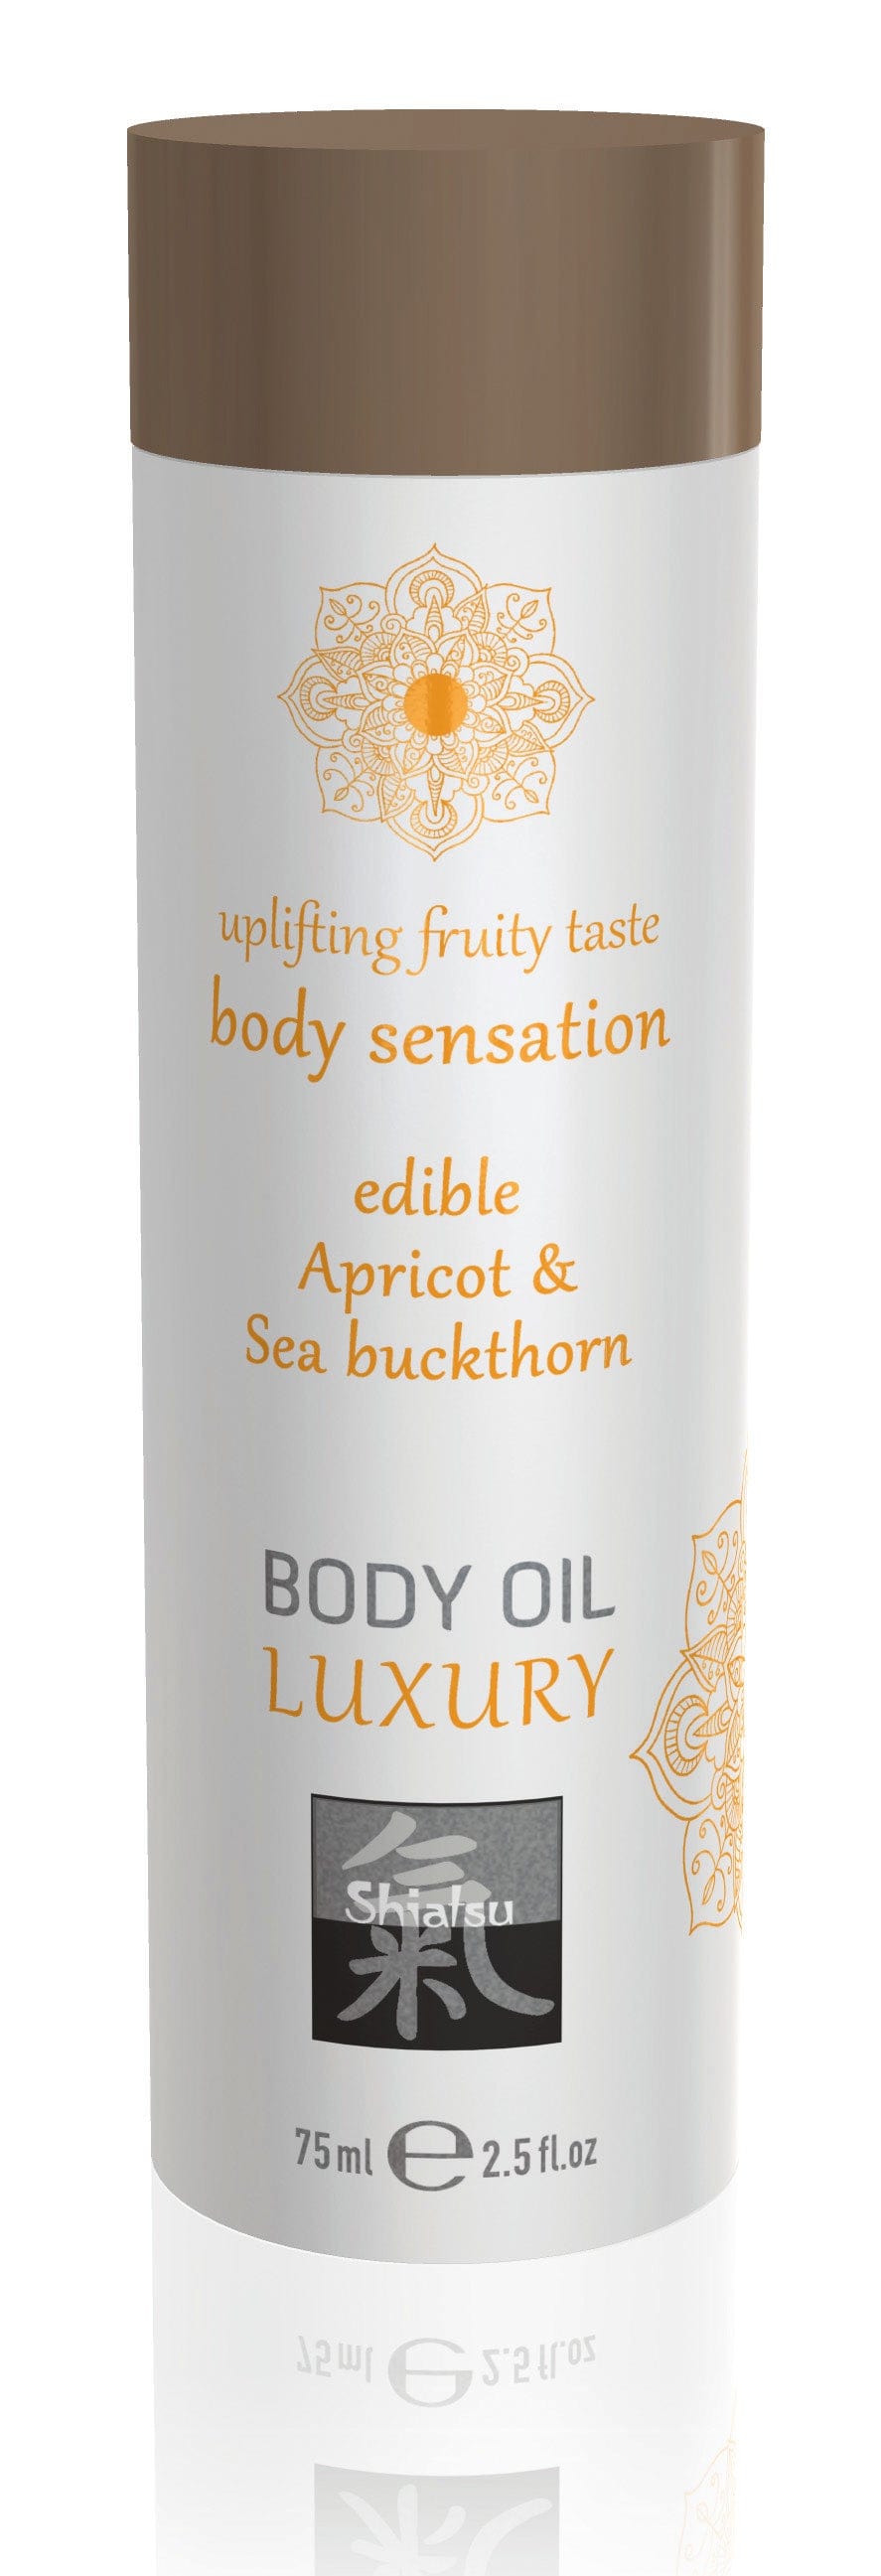 Shiatsu Lotions & Potions Shiatsu Luxury Body Oil Edible Apricot and Sea Buckthorn 4042342004816